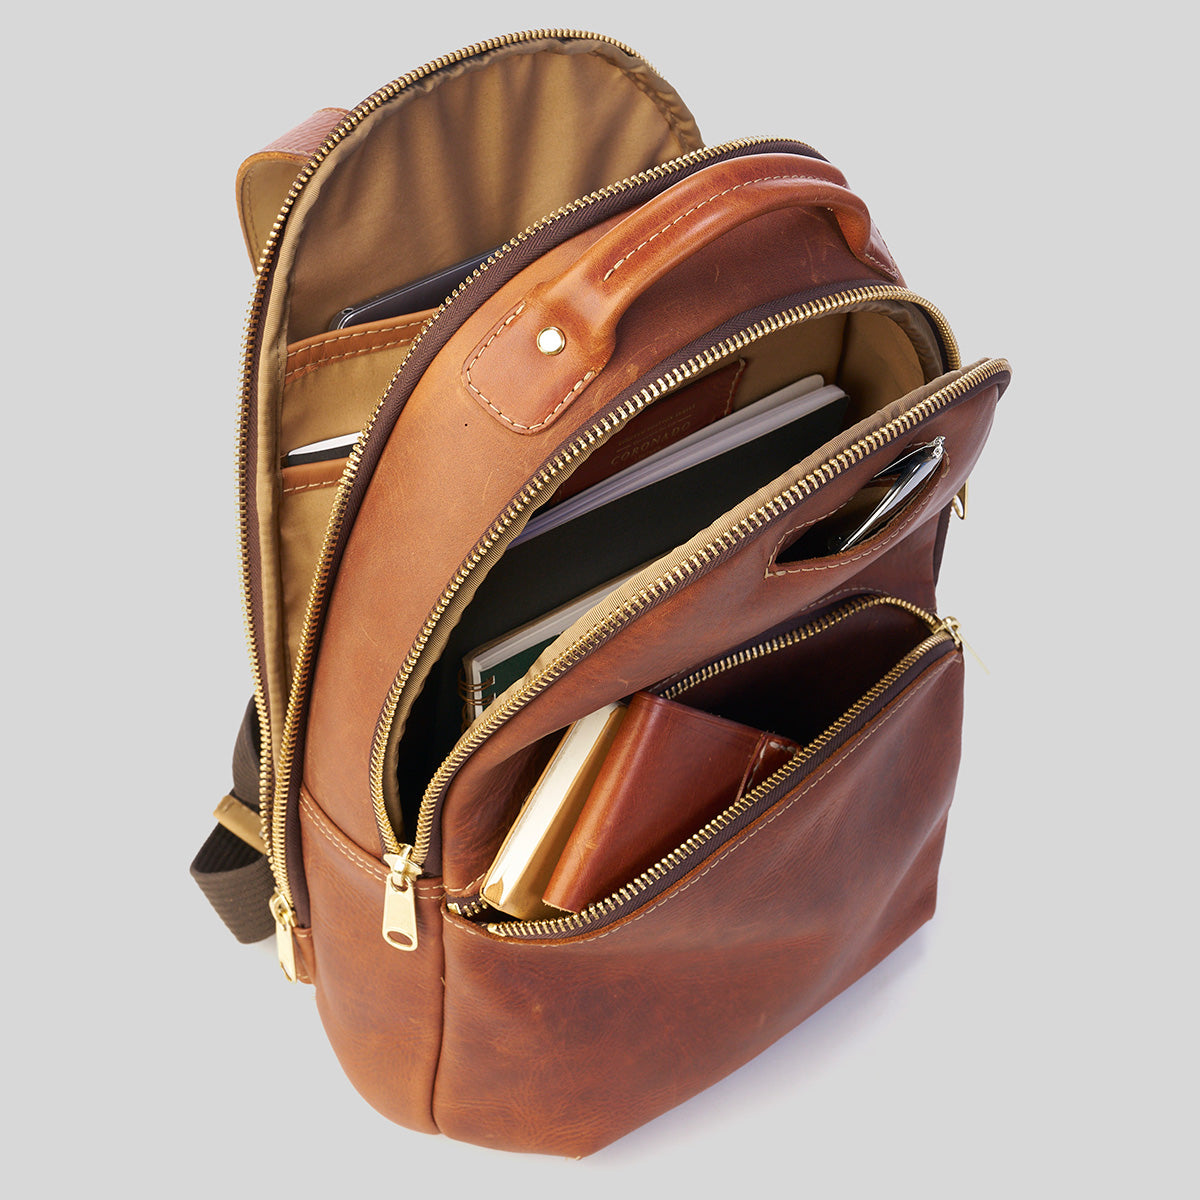 Clark Backpack No. 952  | LE Saddle x20